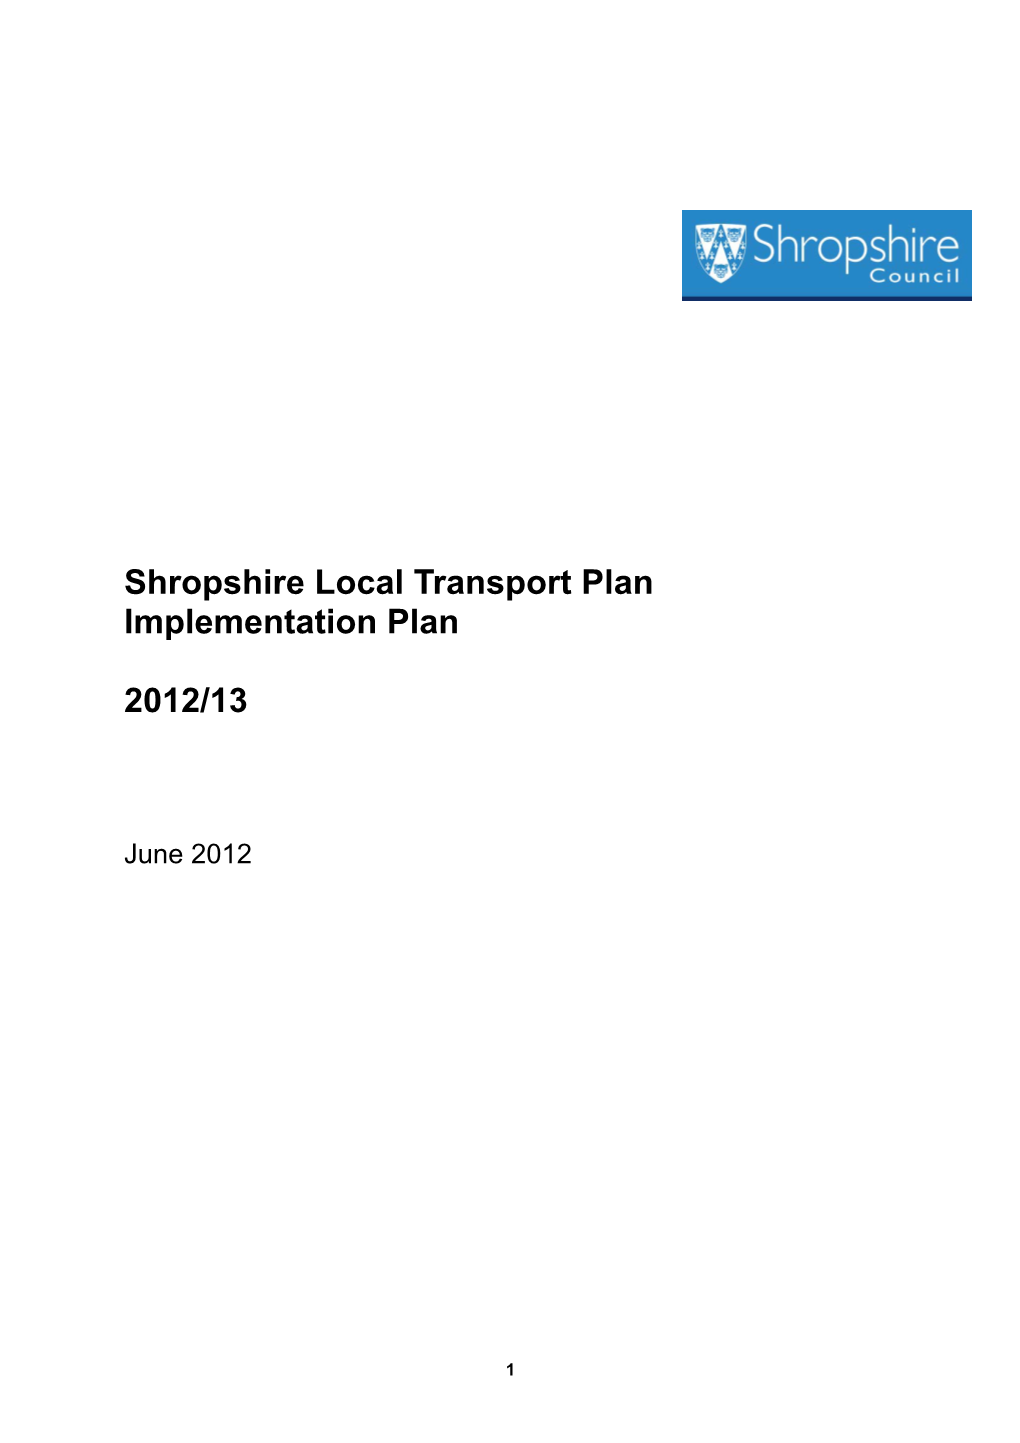 Shropshire Local Transport Plan Implementation Plan 2012/13